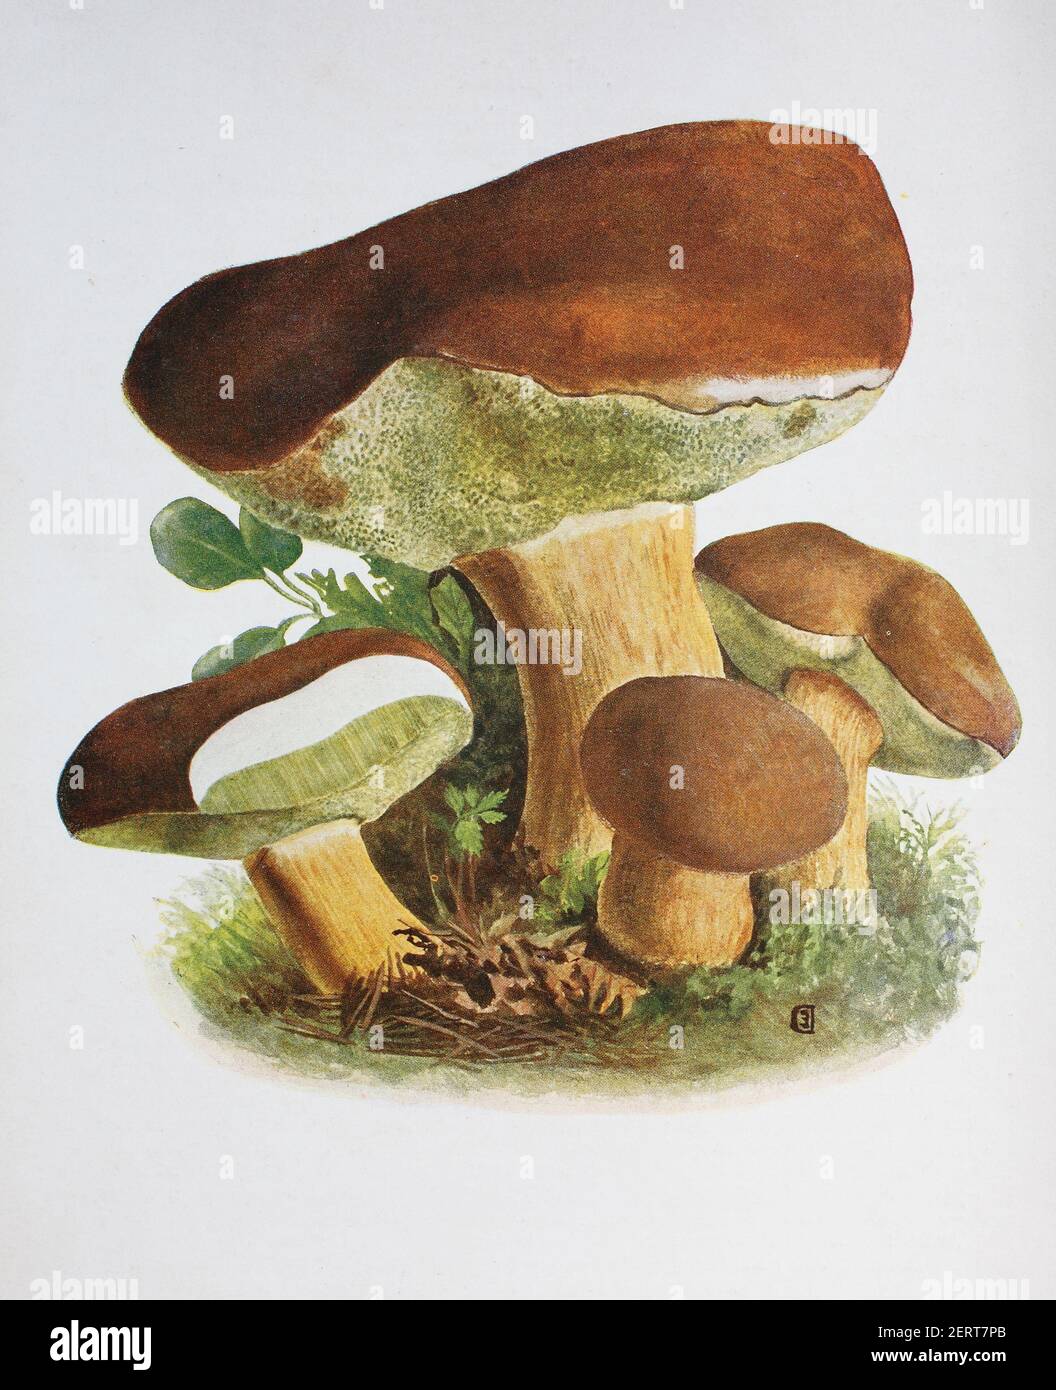 Imleria badia, commonly known as the bay bolete, is an edible, pored mushroom found in Europe and North America. Boletus badius und Xerocomus badius, digital reproduction of an ilustration of Emil Doerstling (1859-1940) Stock Photo